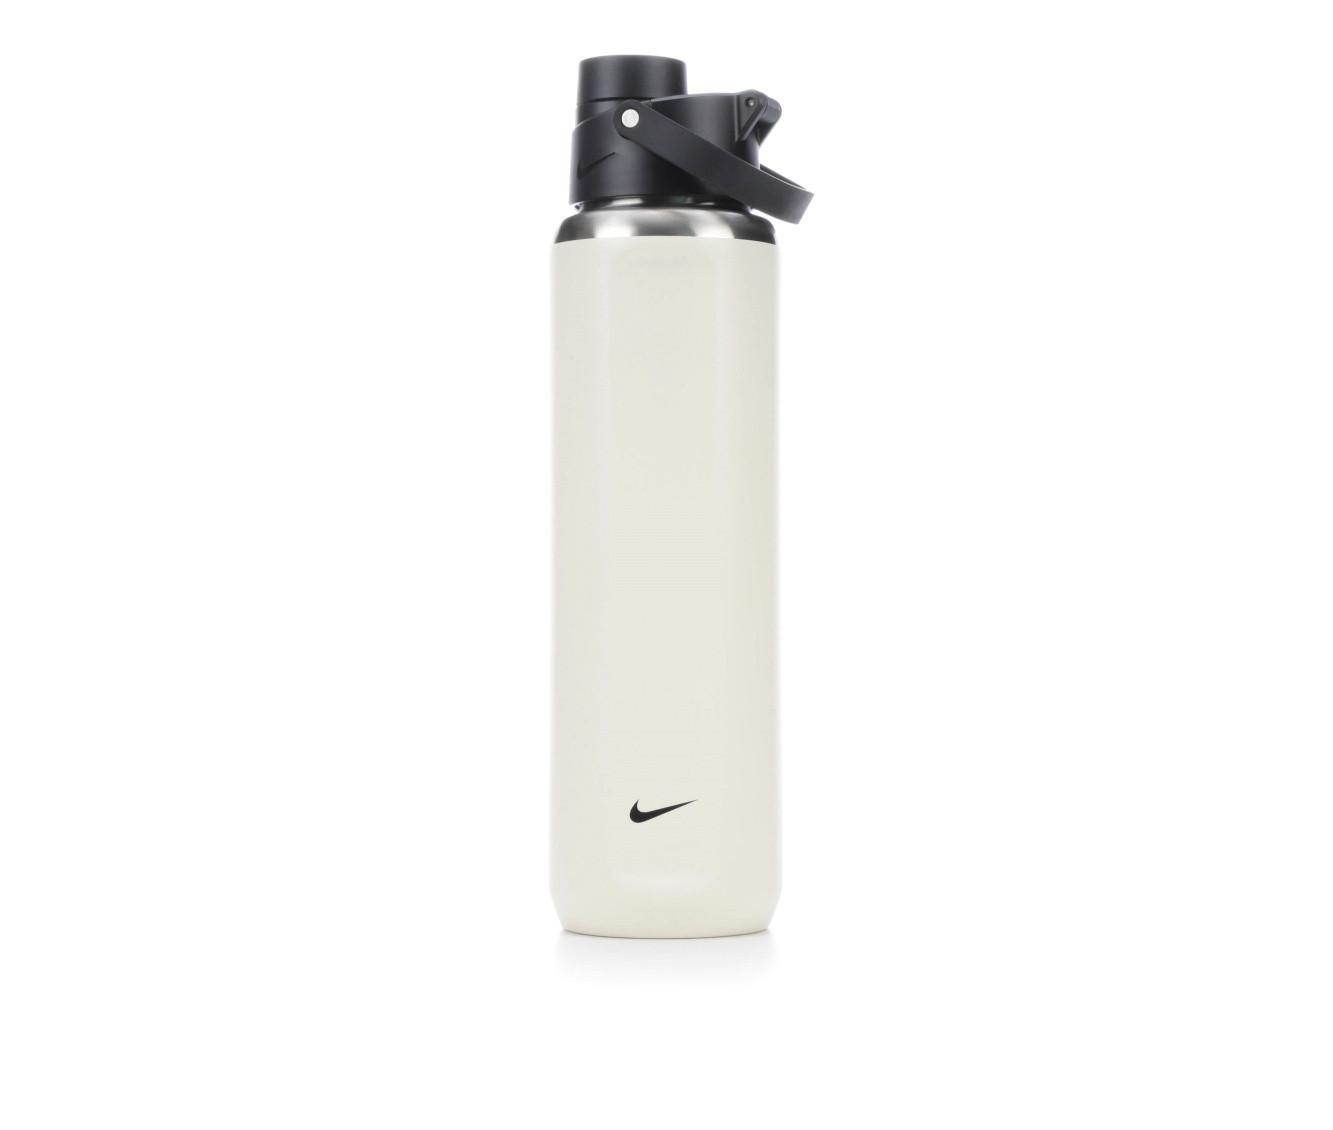 Nike Recharge 24 oz. Stainless Steel Straw Bottle, Black/Black/White